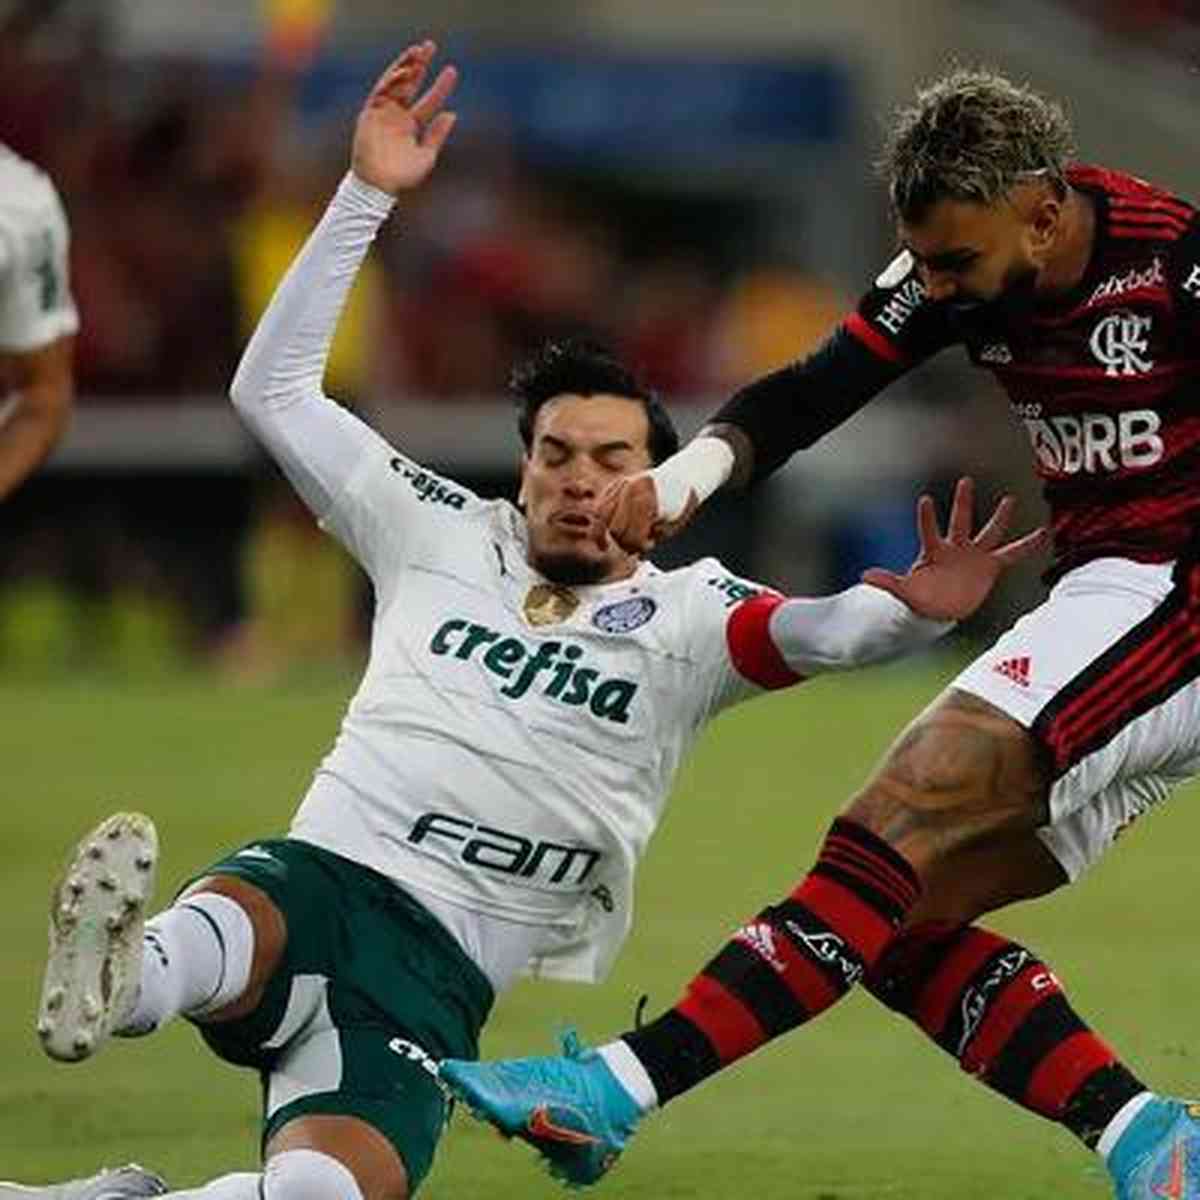 Palmeiras VOLTA A JOGAR HOJE após TÍTULO da Supercopa; Flamengo